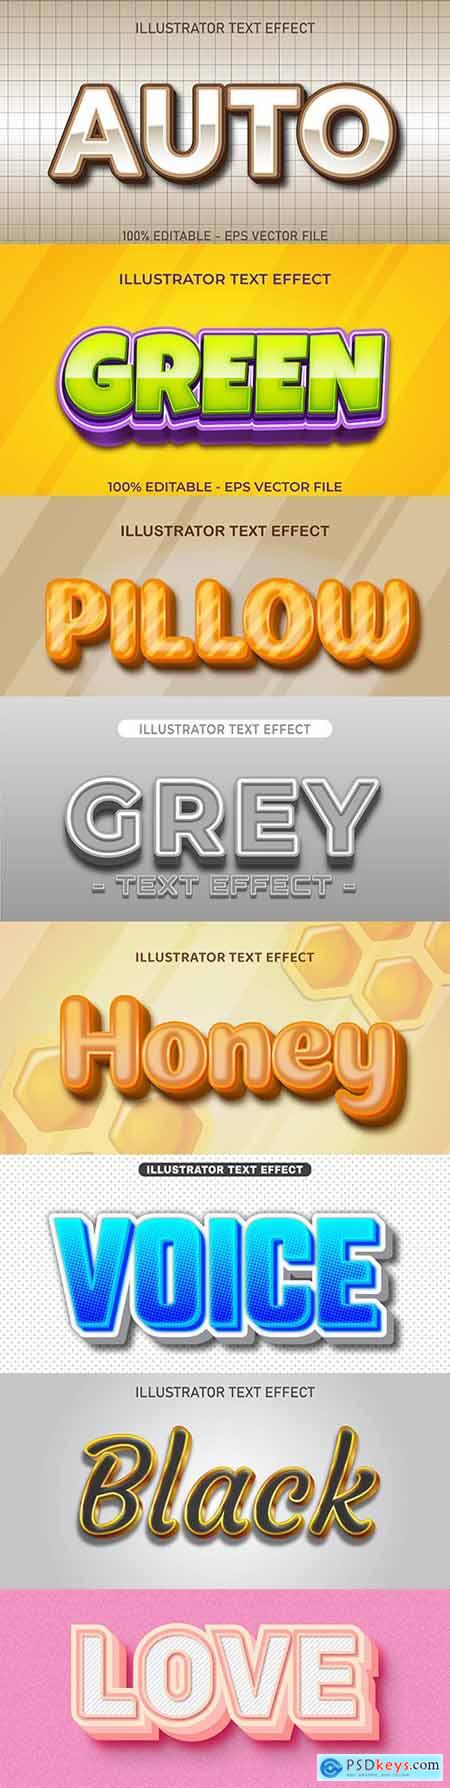 Editable font effect text collection illustration design 195